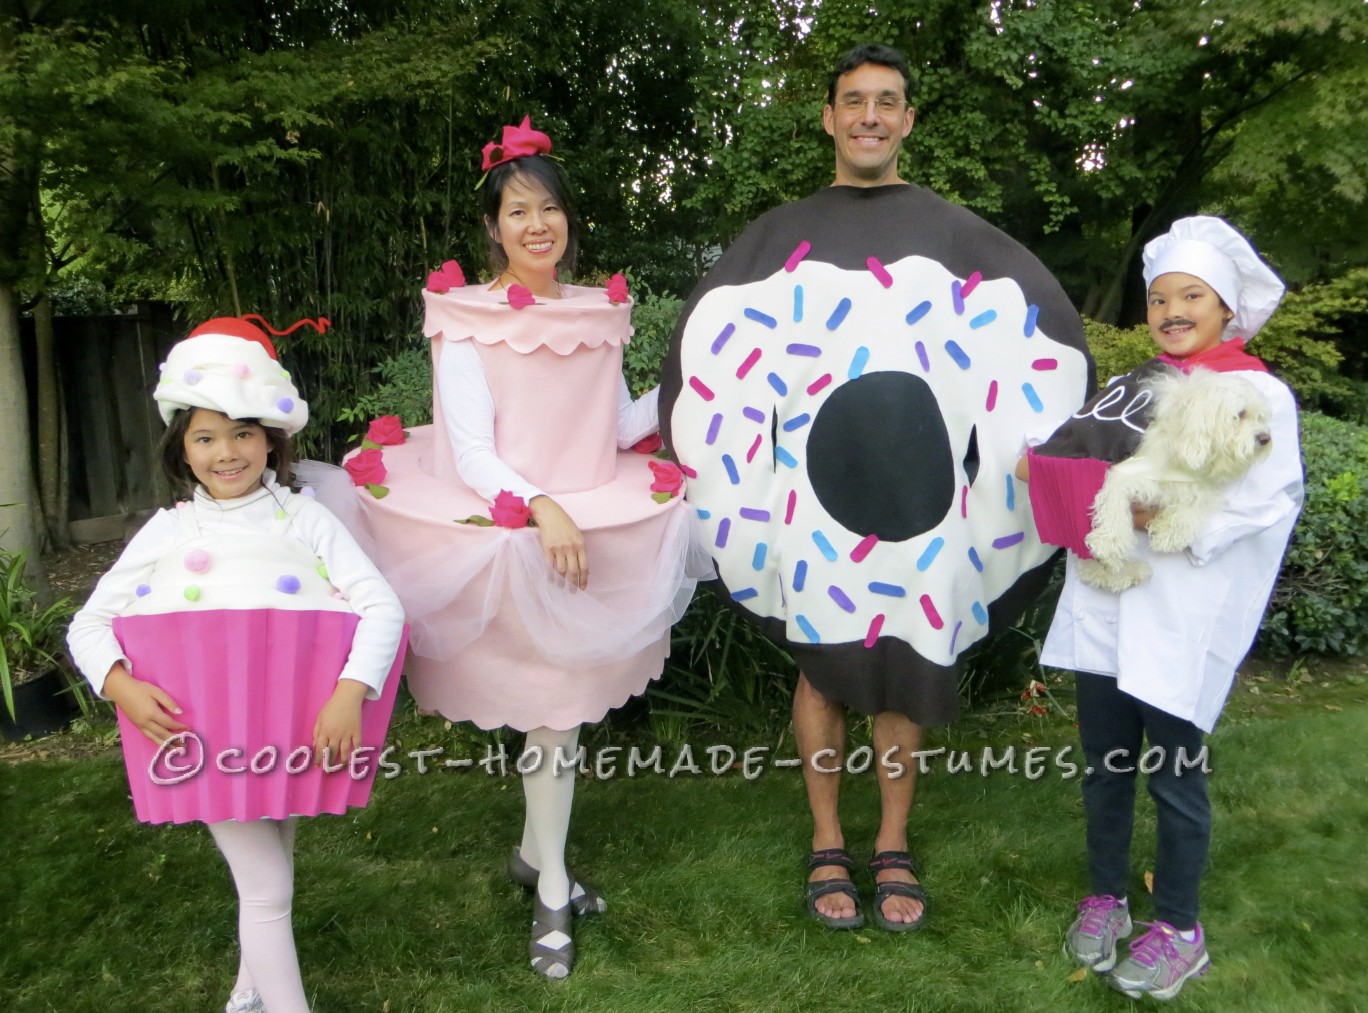 Homemade Family Halloween Costumes That Take the Cake!